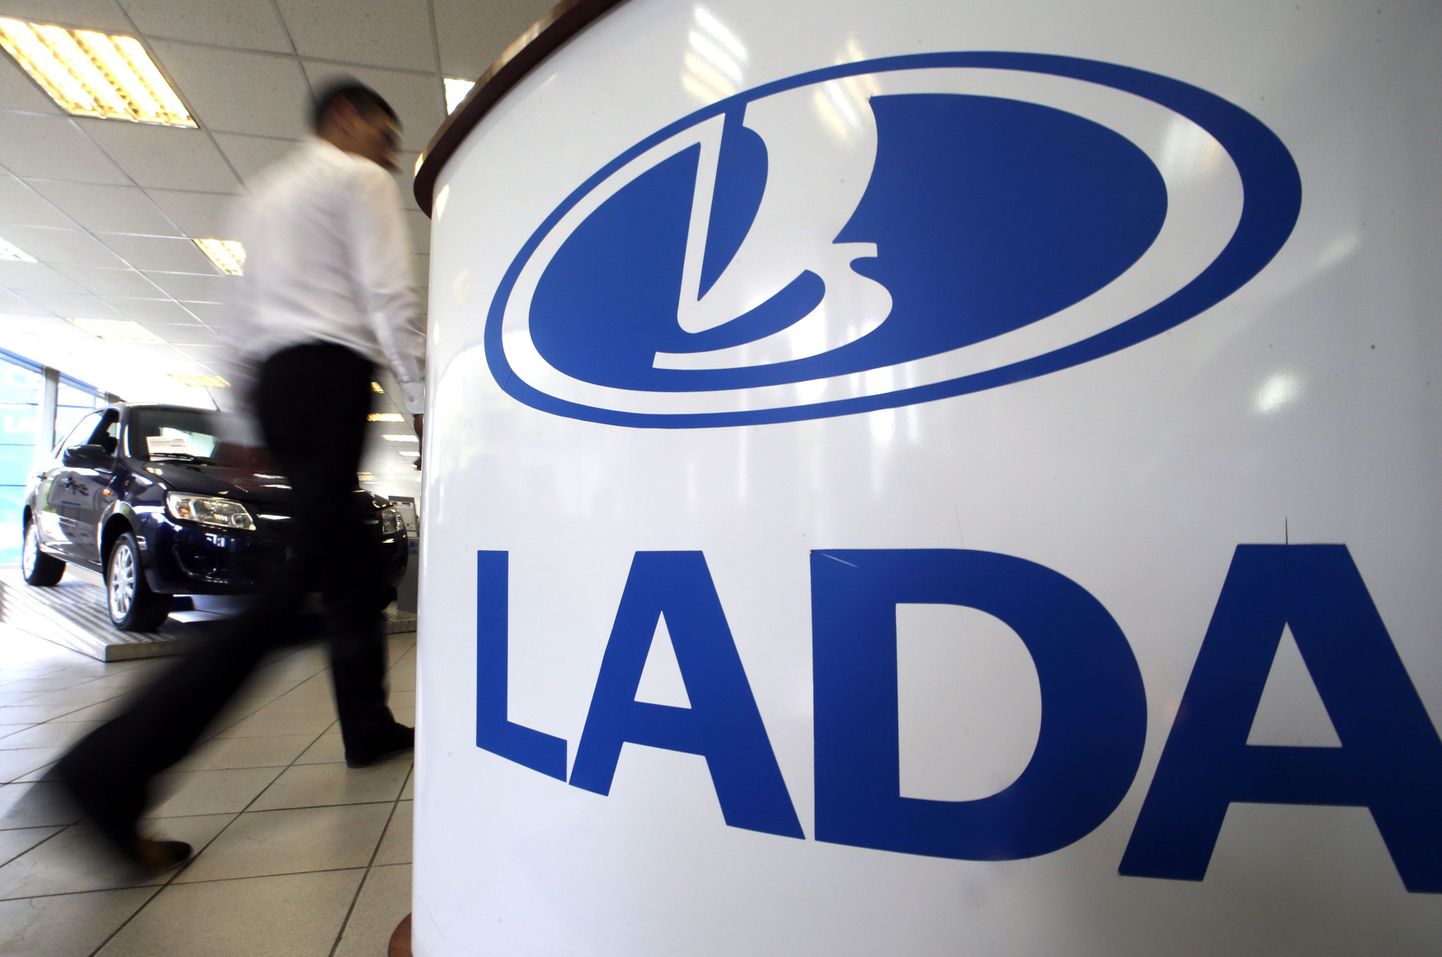 Vene autotootja Lada logo.